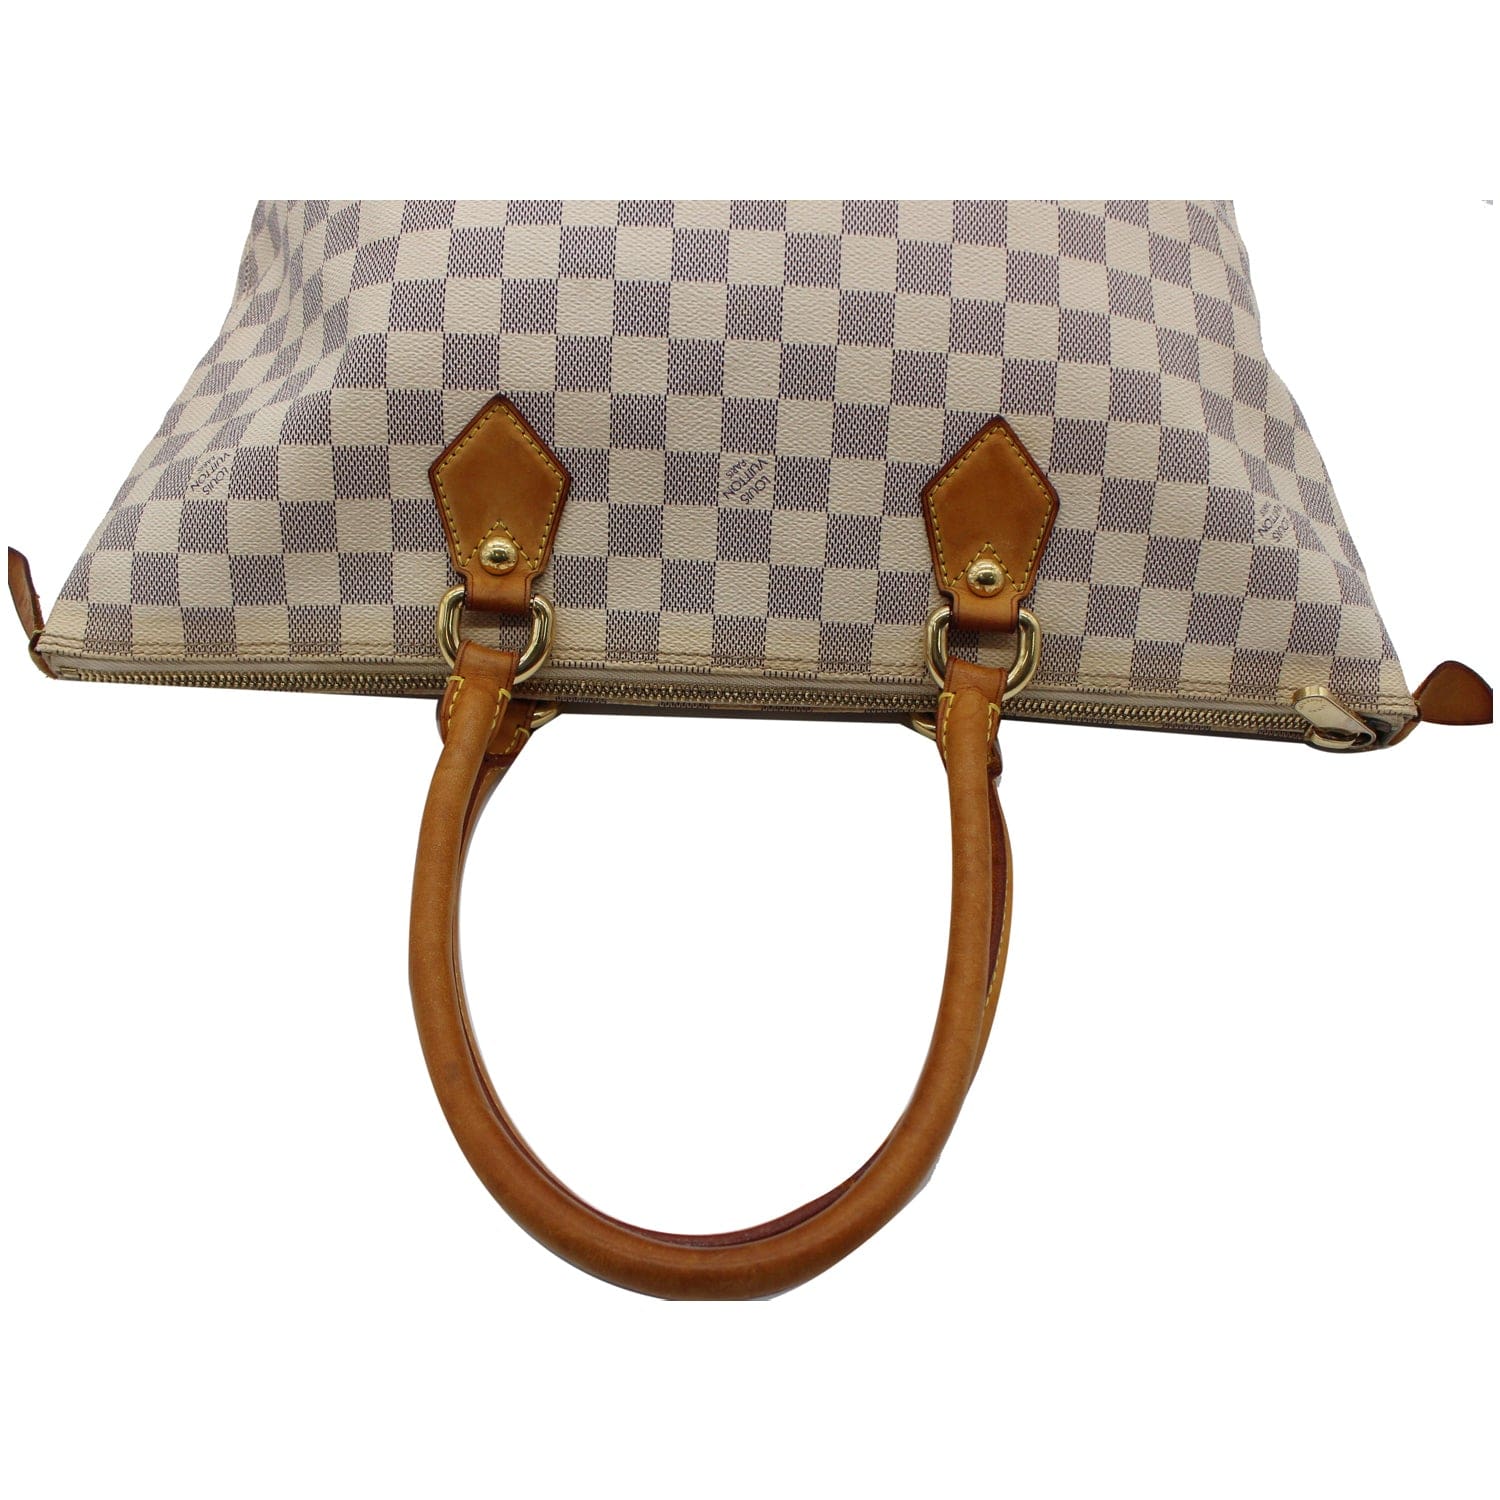 Louis Vuitton Damier Azur Saleya MM Zip Tote Bag 89lk615s For